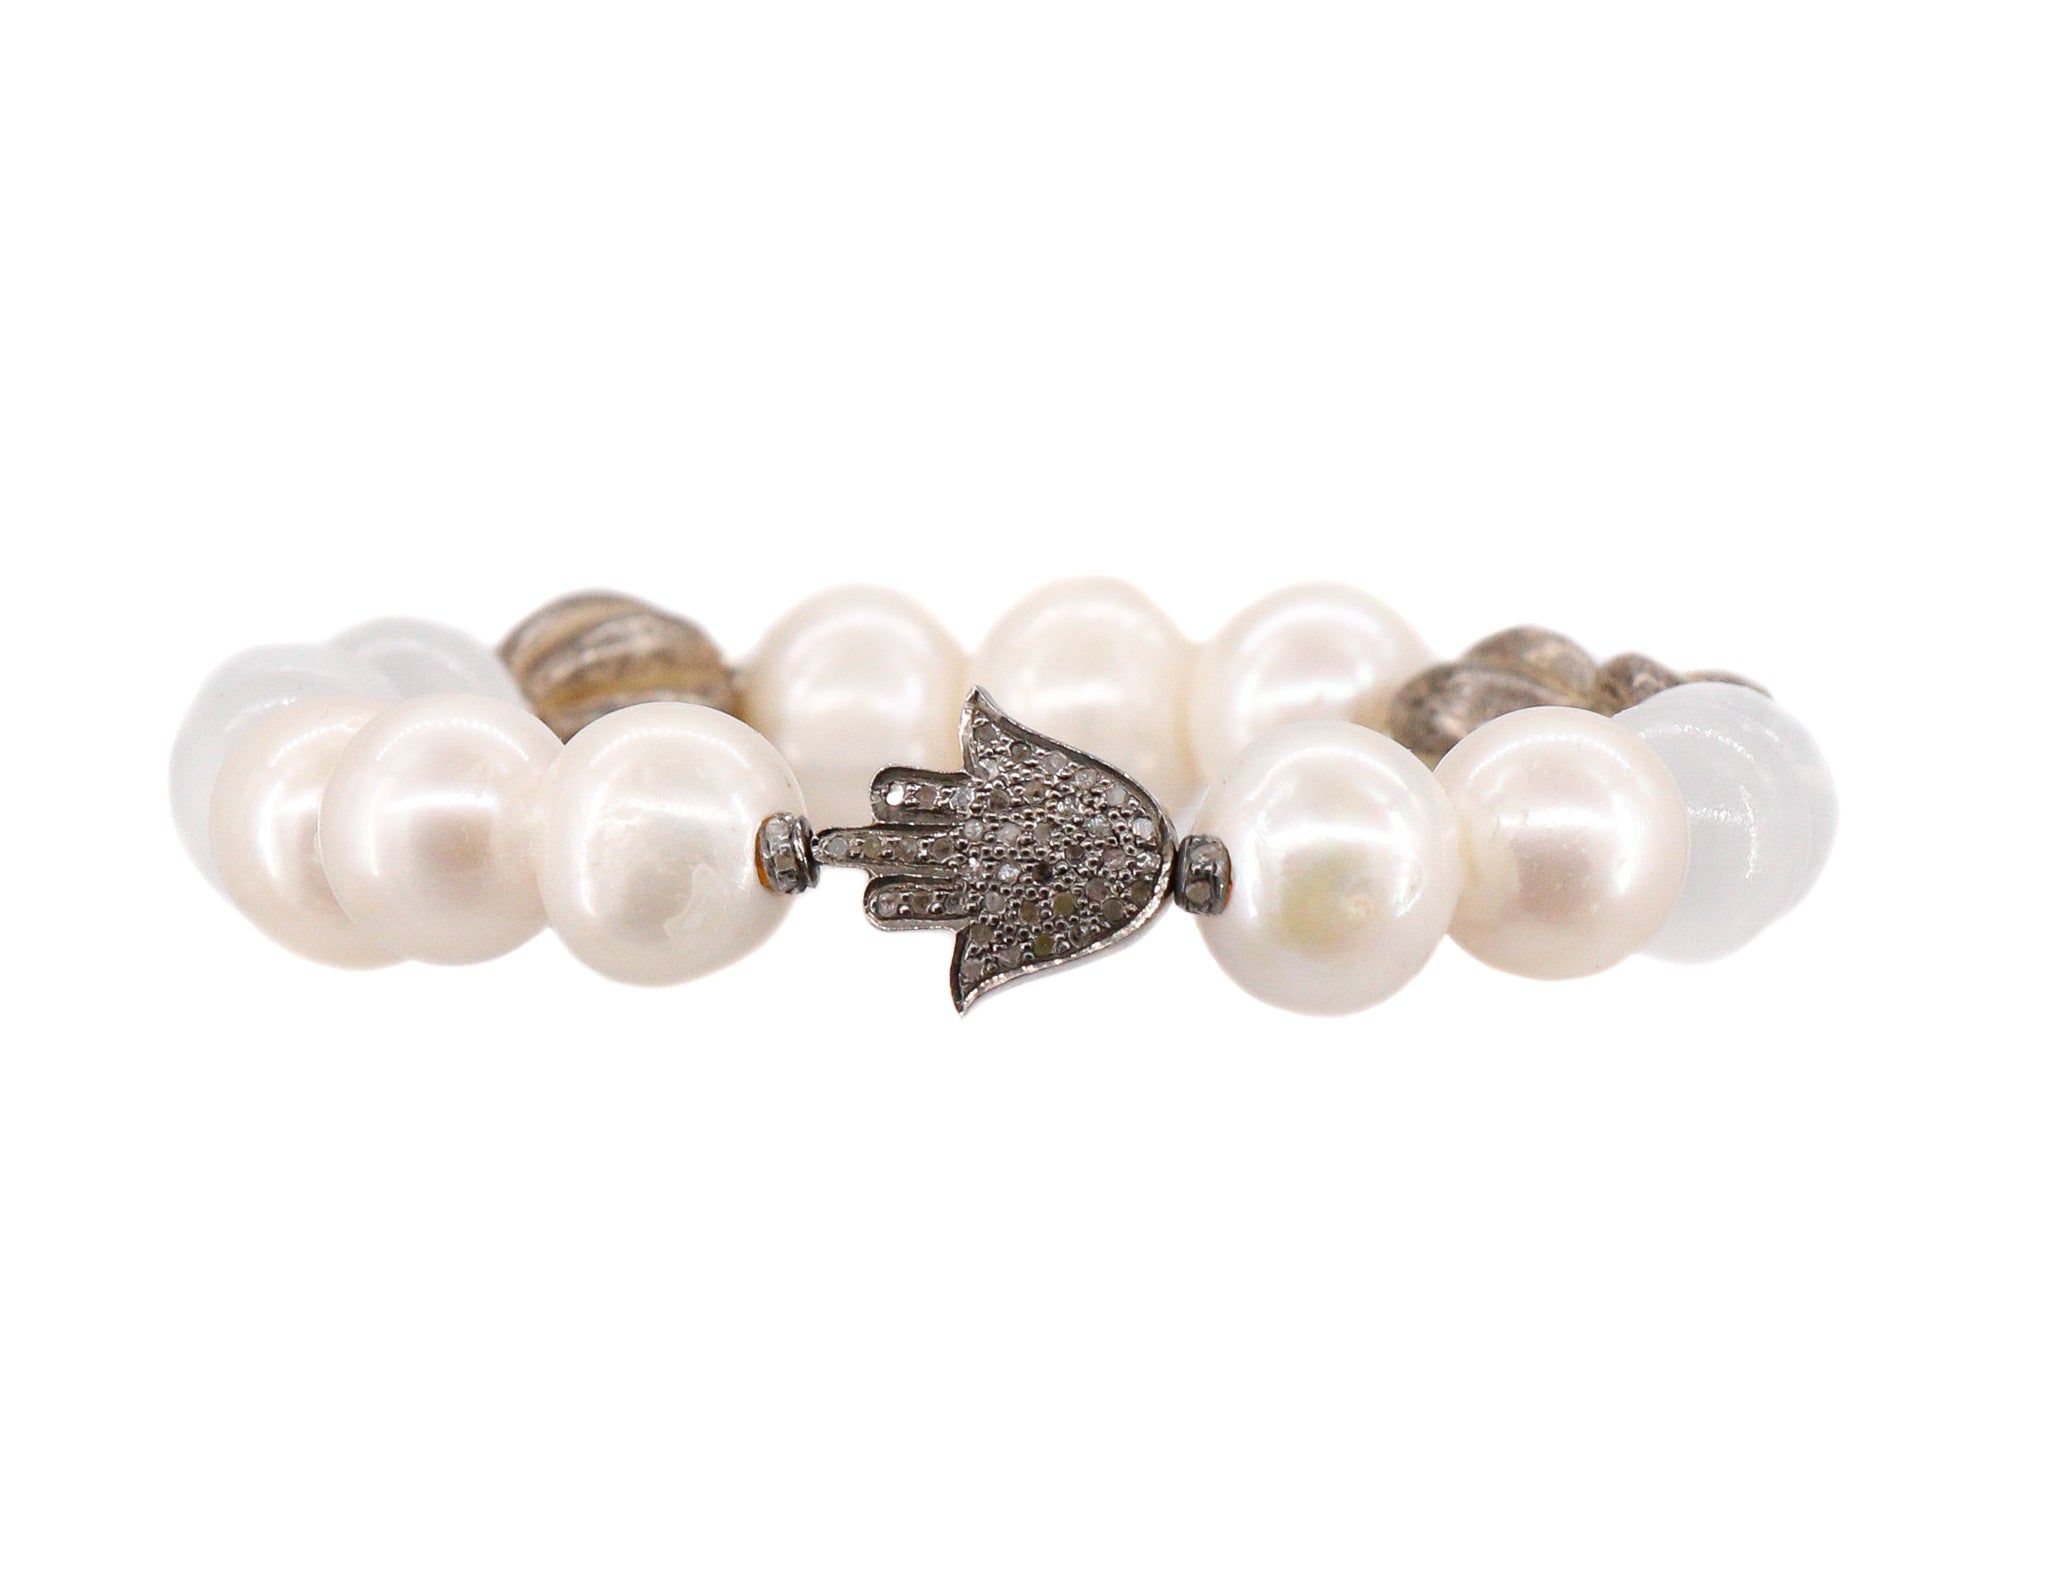 Freshwater pearl and pave diamond hamsa bracelet